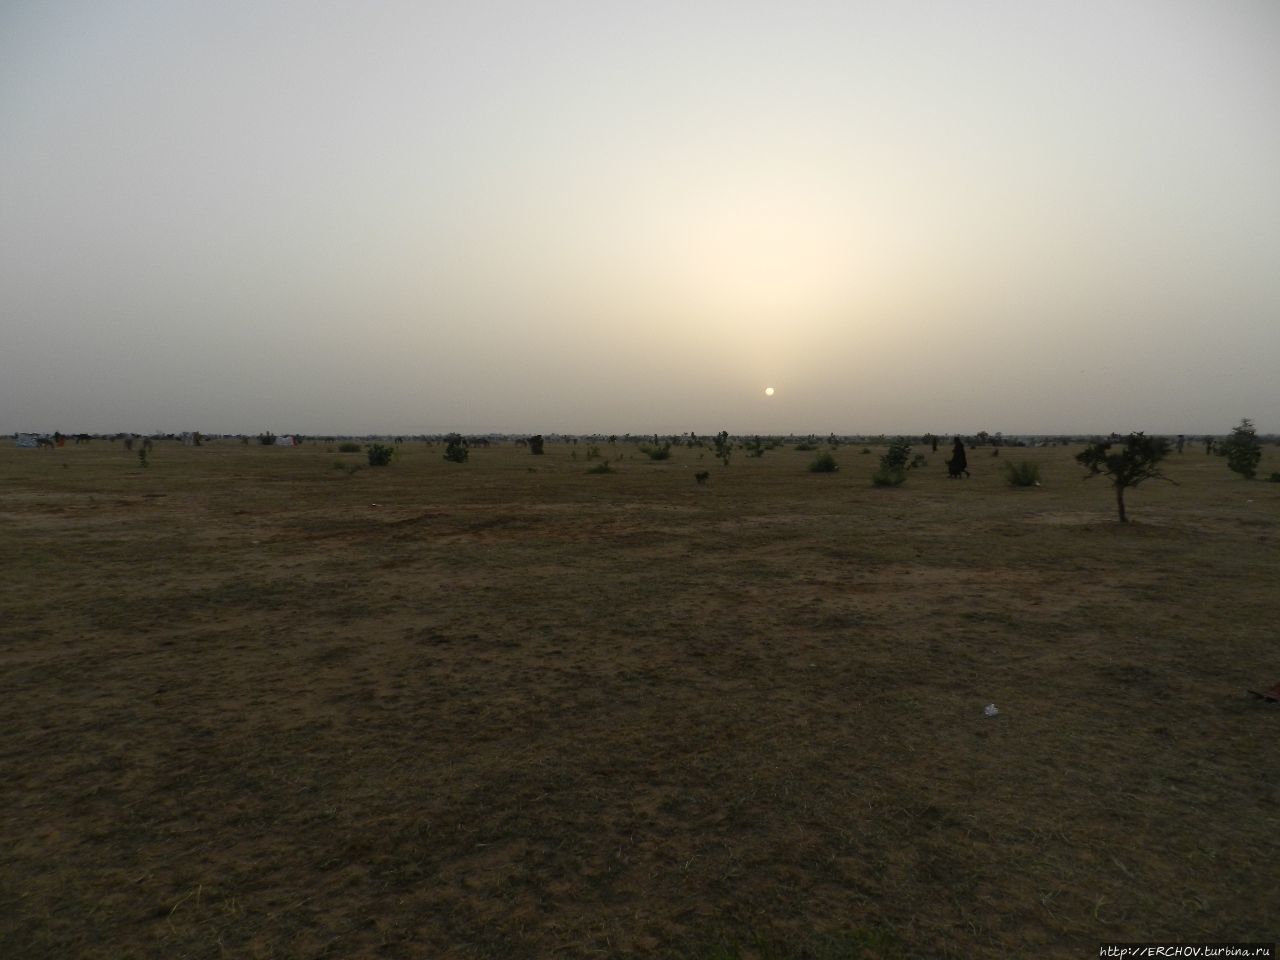 Нигер. Ч — 14. Пустыня и её обитатели Департамент Агадес, Нигер